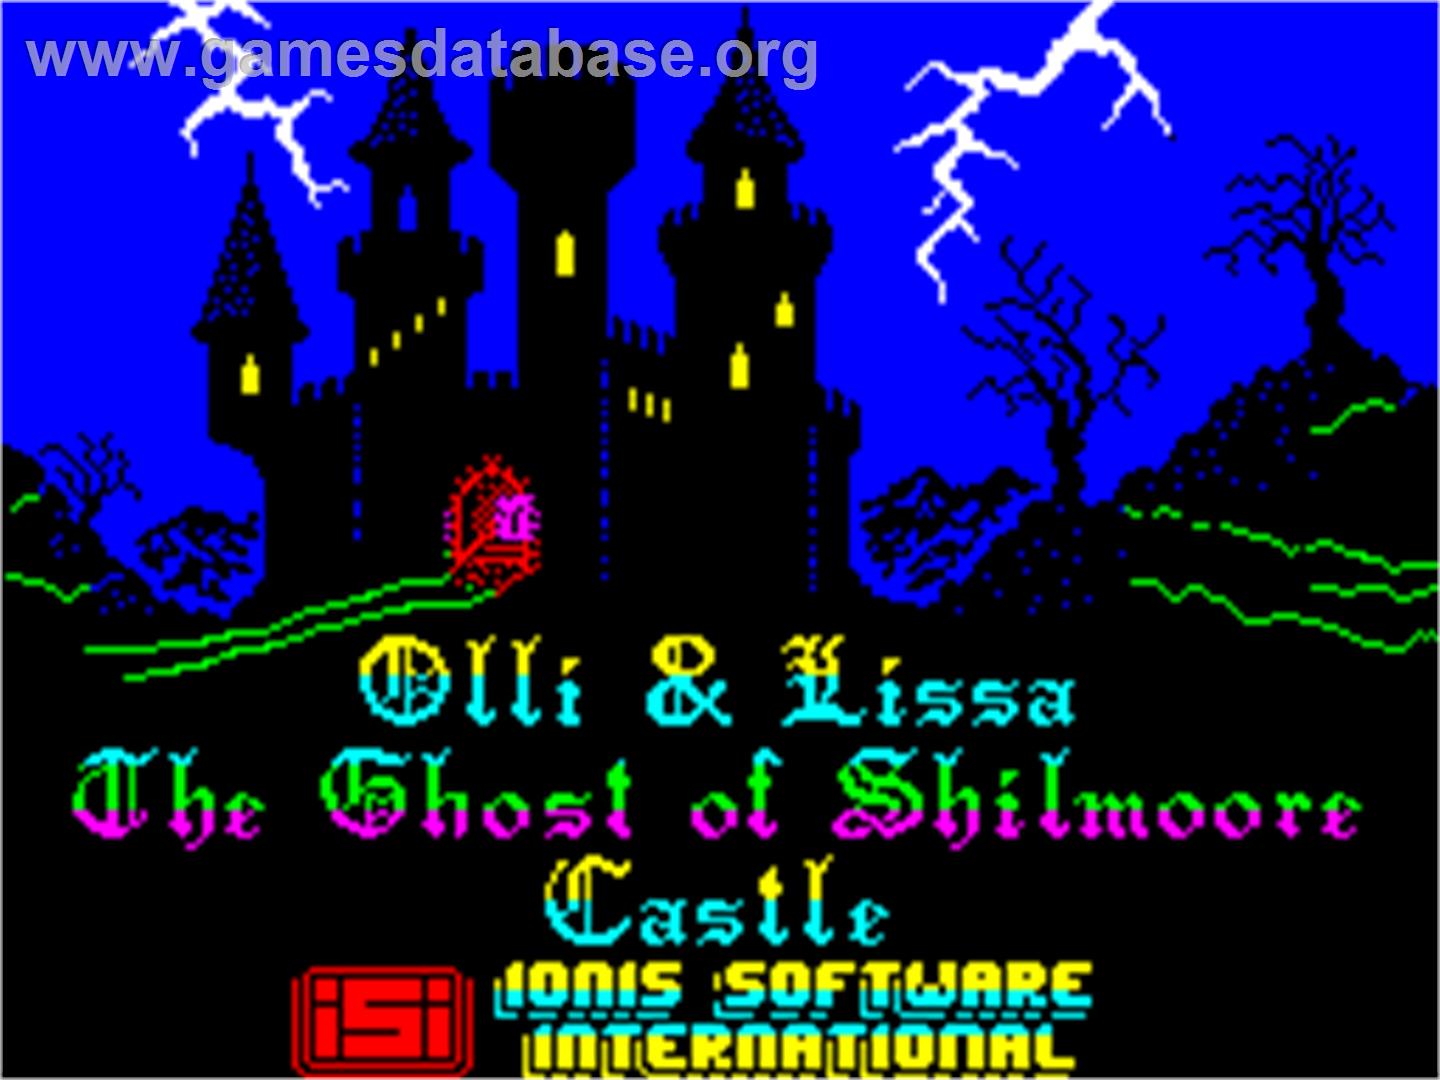 Olli & Lissa: The Ghost of Shilmore Castle - Sinclair ZX Spectrum - Artwork - Title Screen